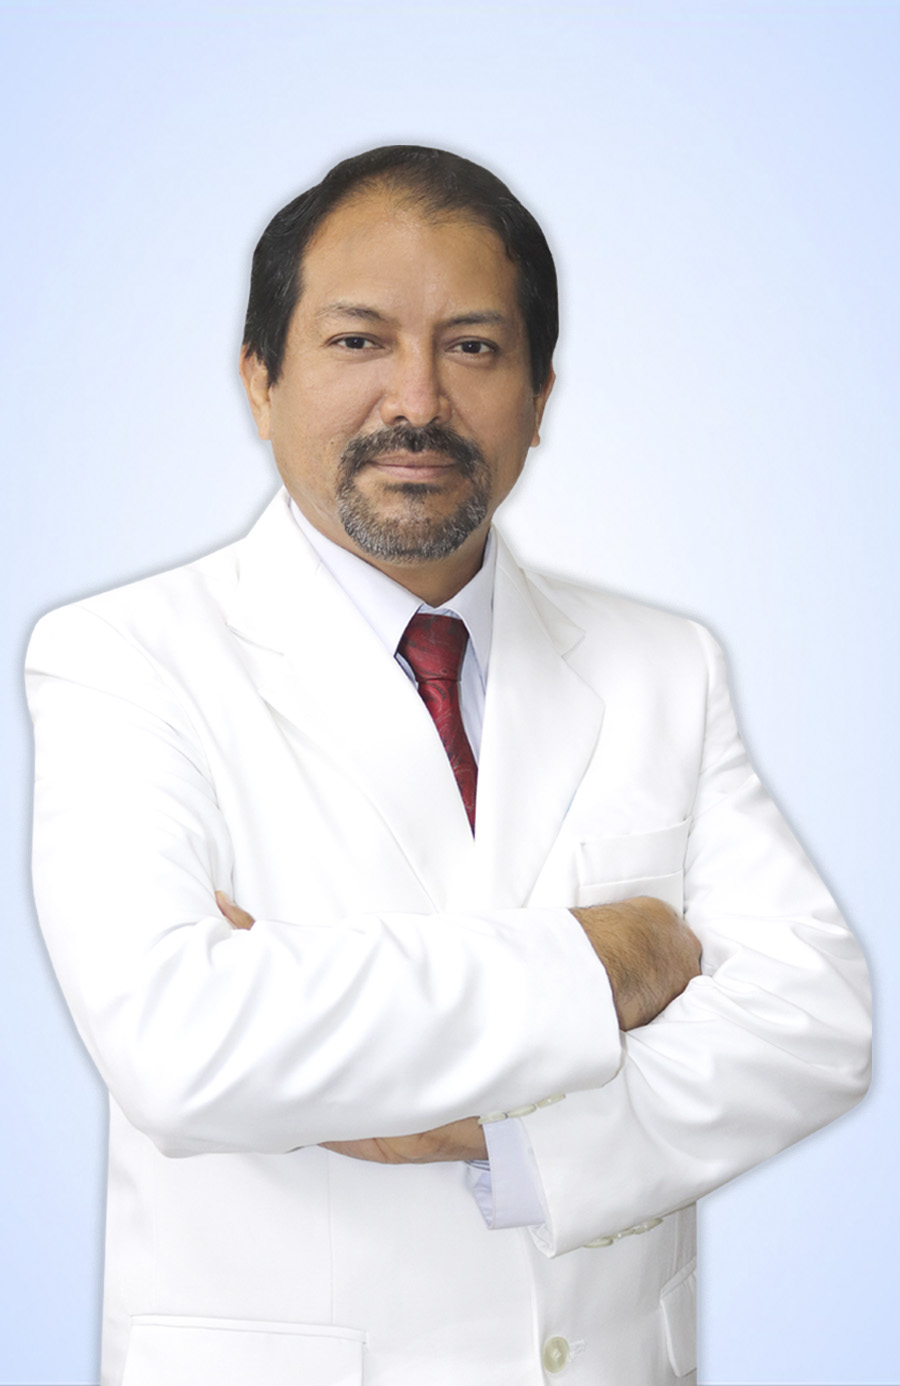 DR. CARDENAS NUÑEZ